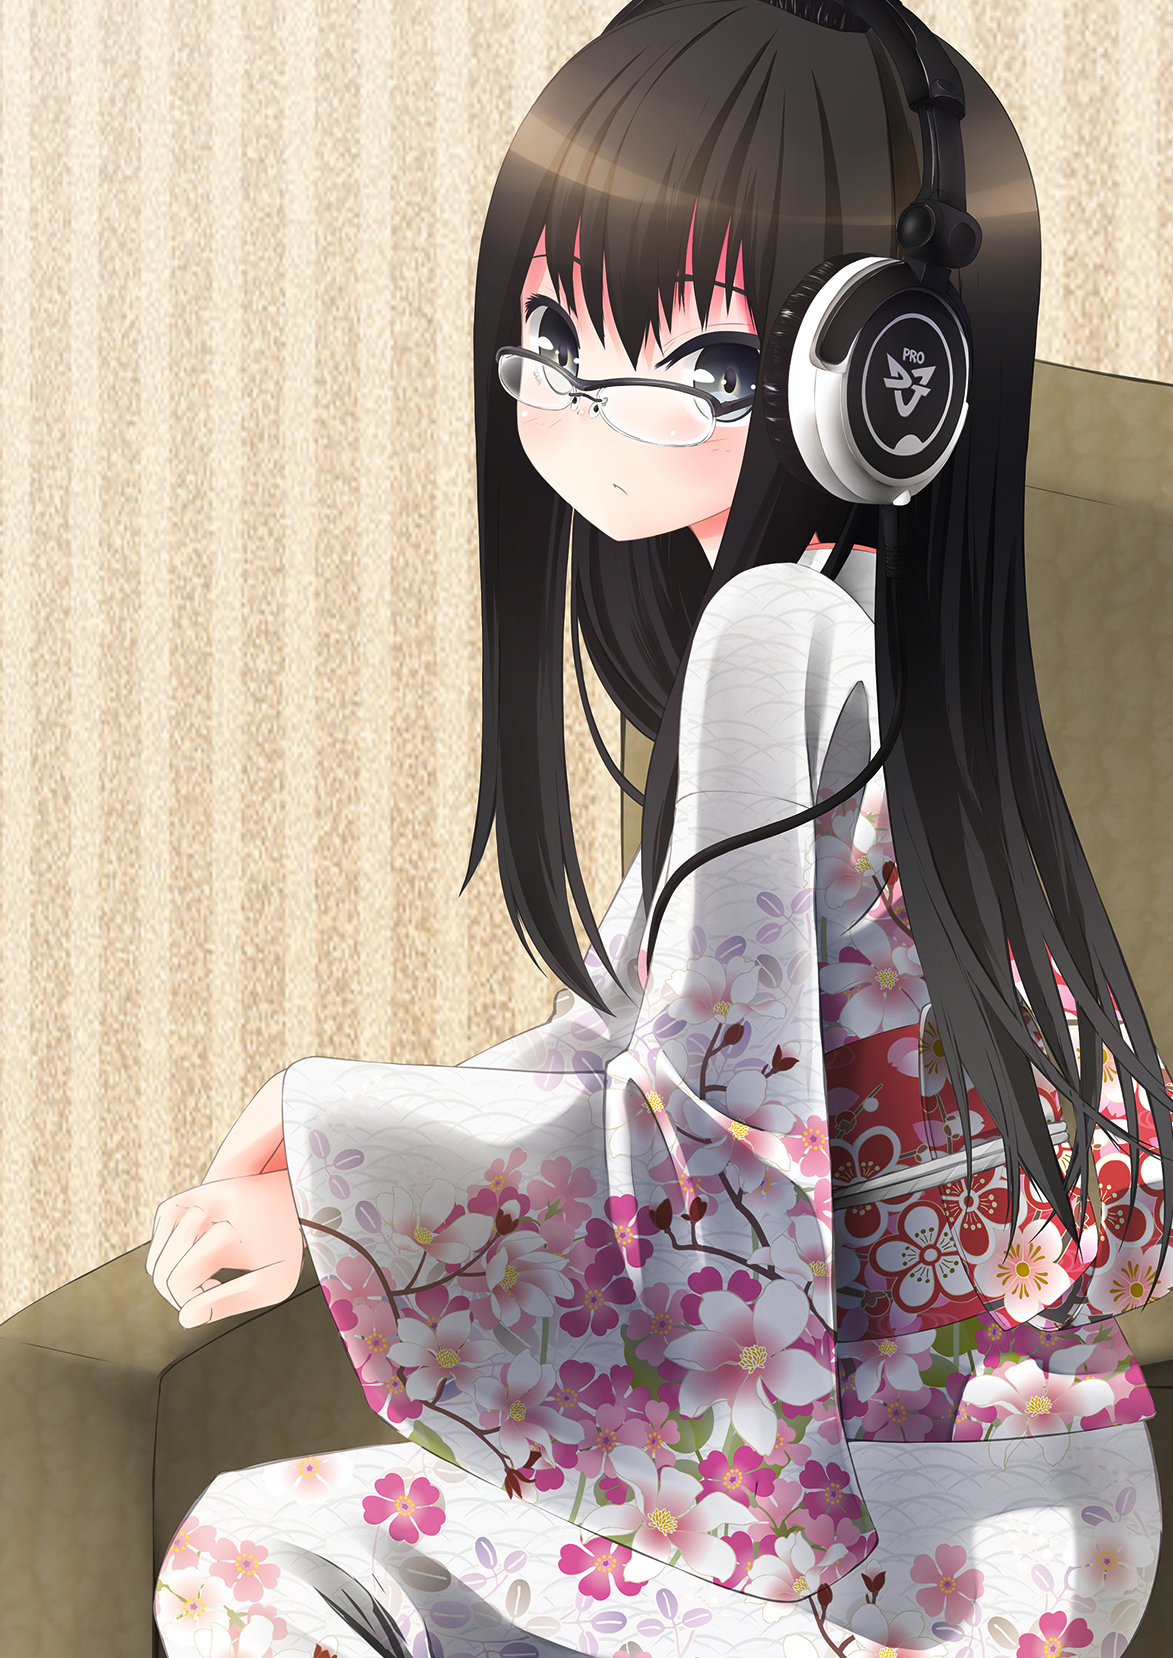 long_black_hair_kimono_glasses_headphones_by_ekakibitohane-d6104qi.jpg